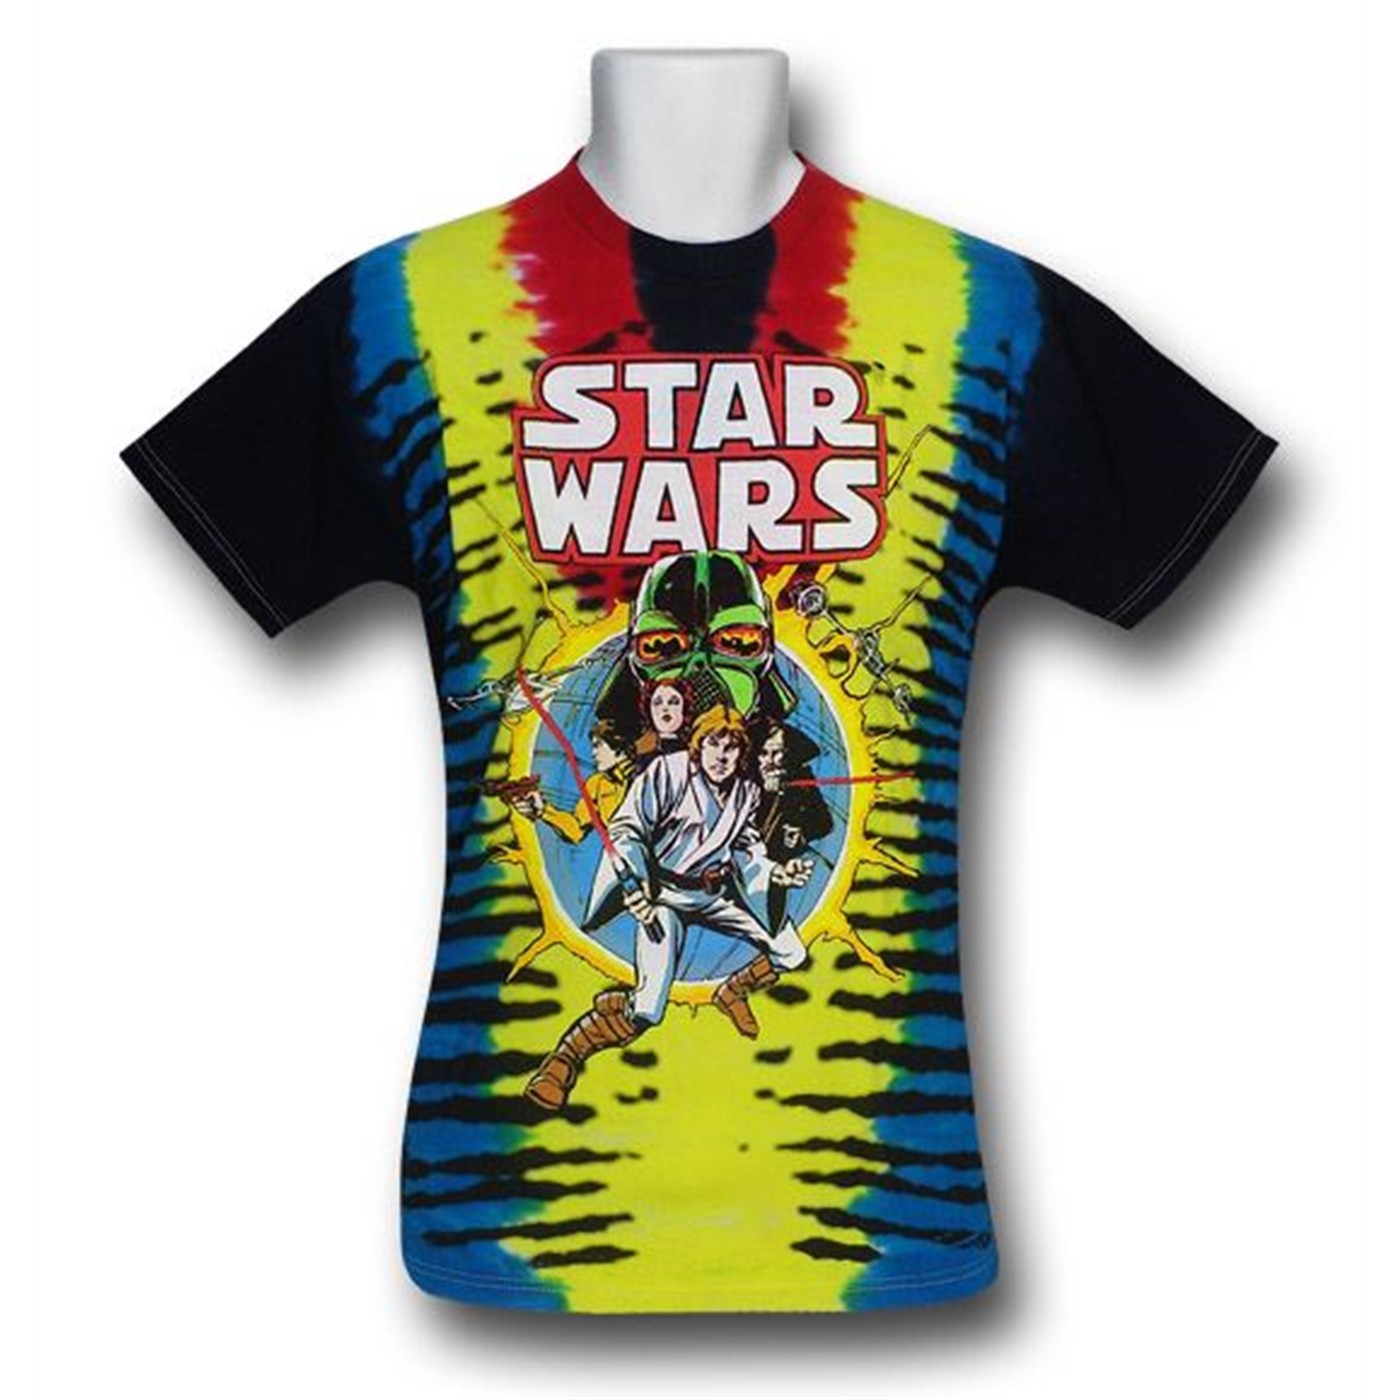 Star Wars Tie Dye Comic Cover T-Shirt